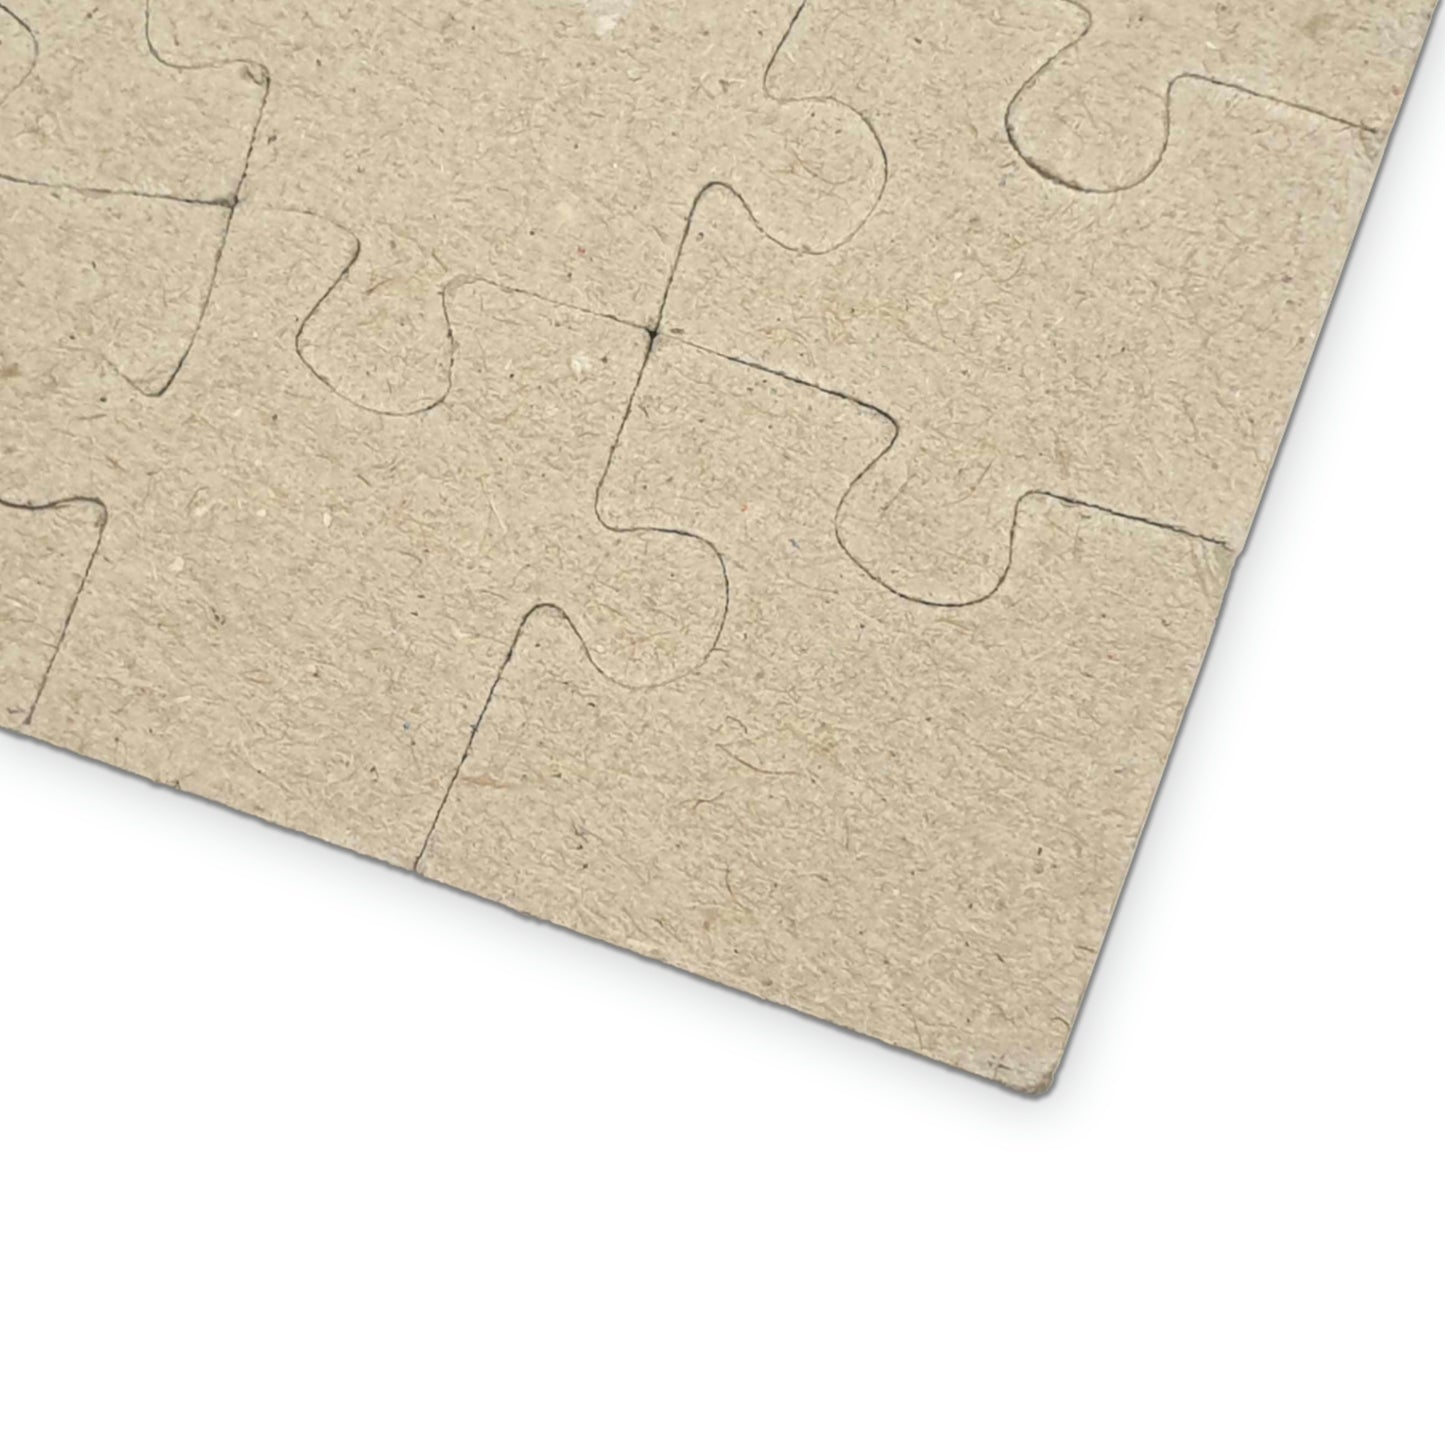 Missing Thread - 1000 Piece Jigsaw Puzzle